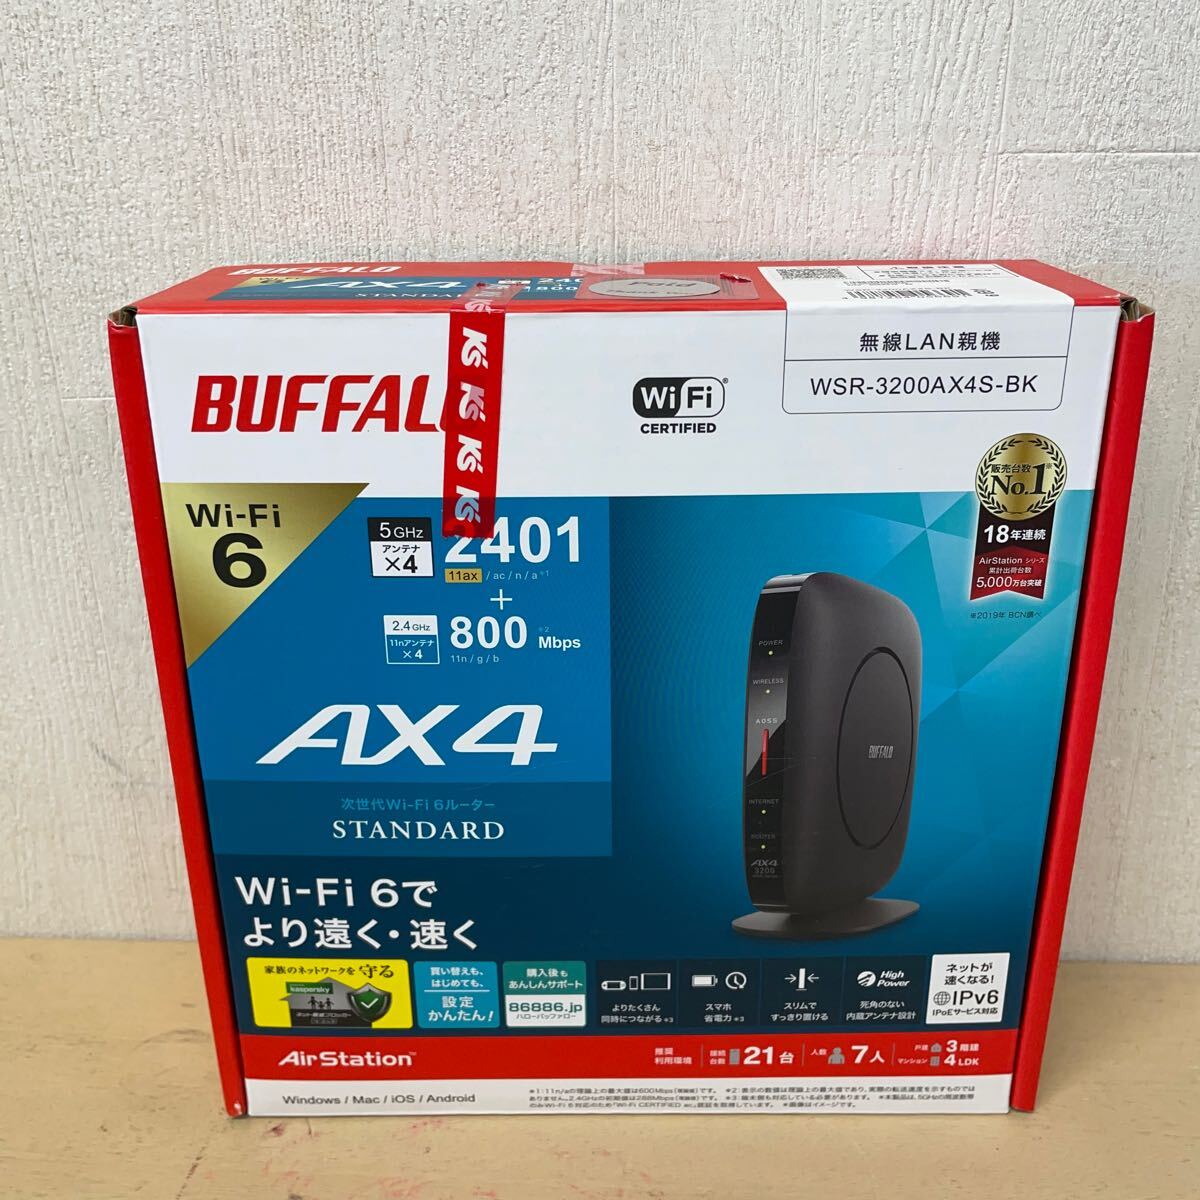 BUFFALO Buffalo беспроводной LAN родители машина WSR-3200AX4S-BK Wi-Fi 6